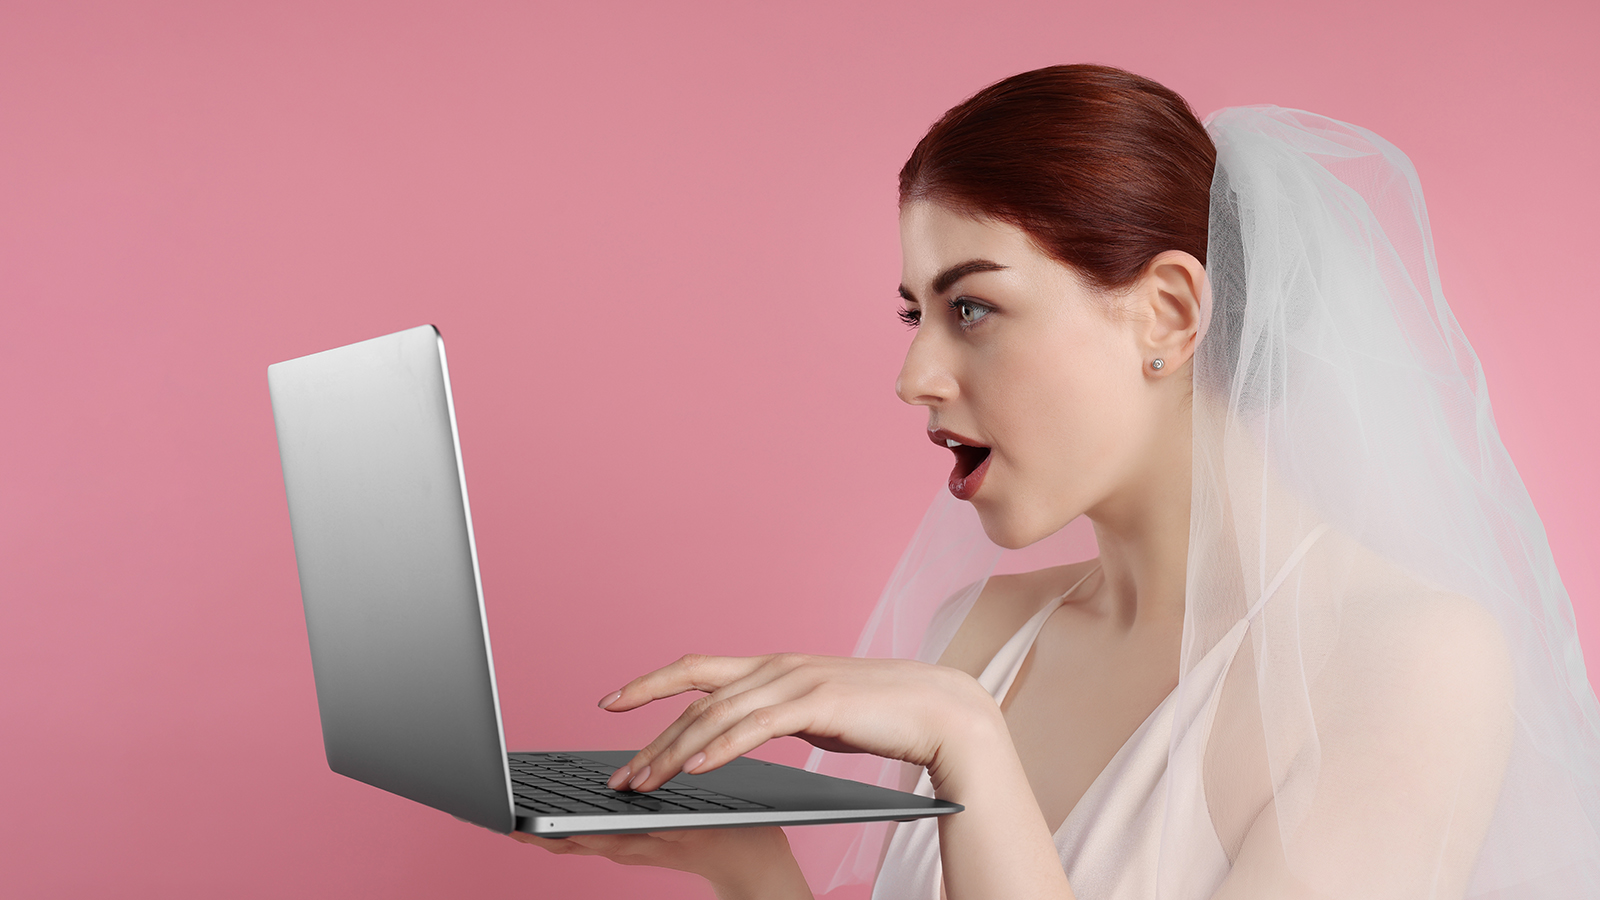 Surprised bride using laptop on pink background